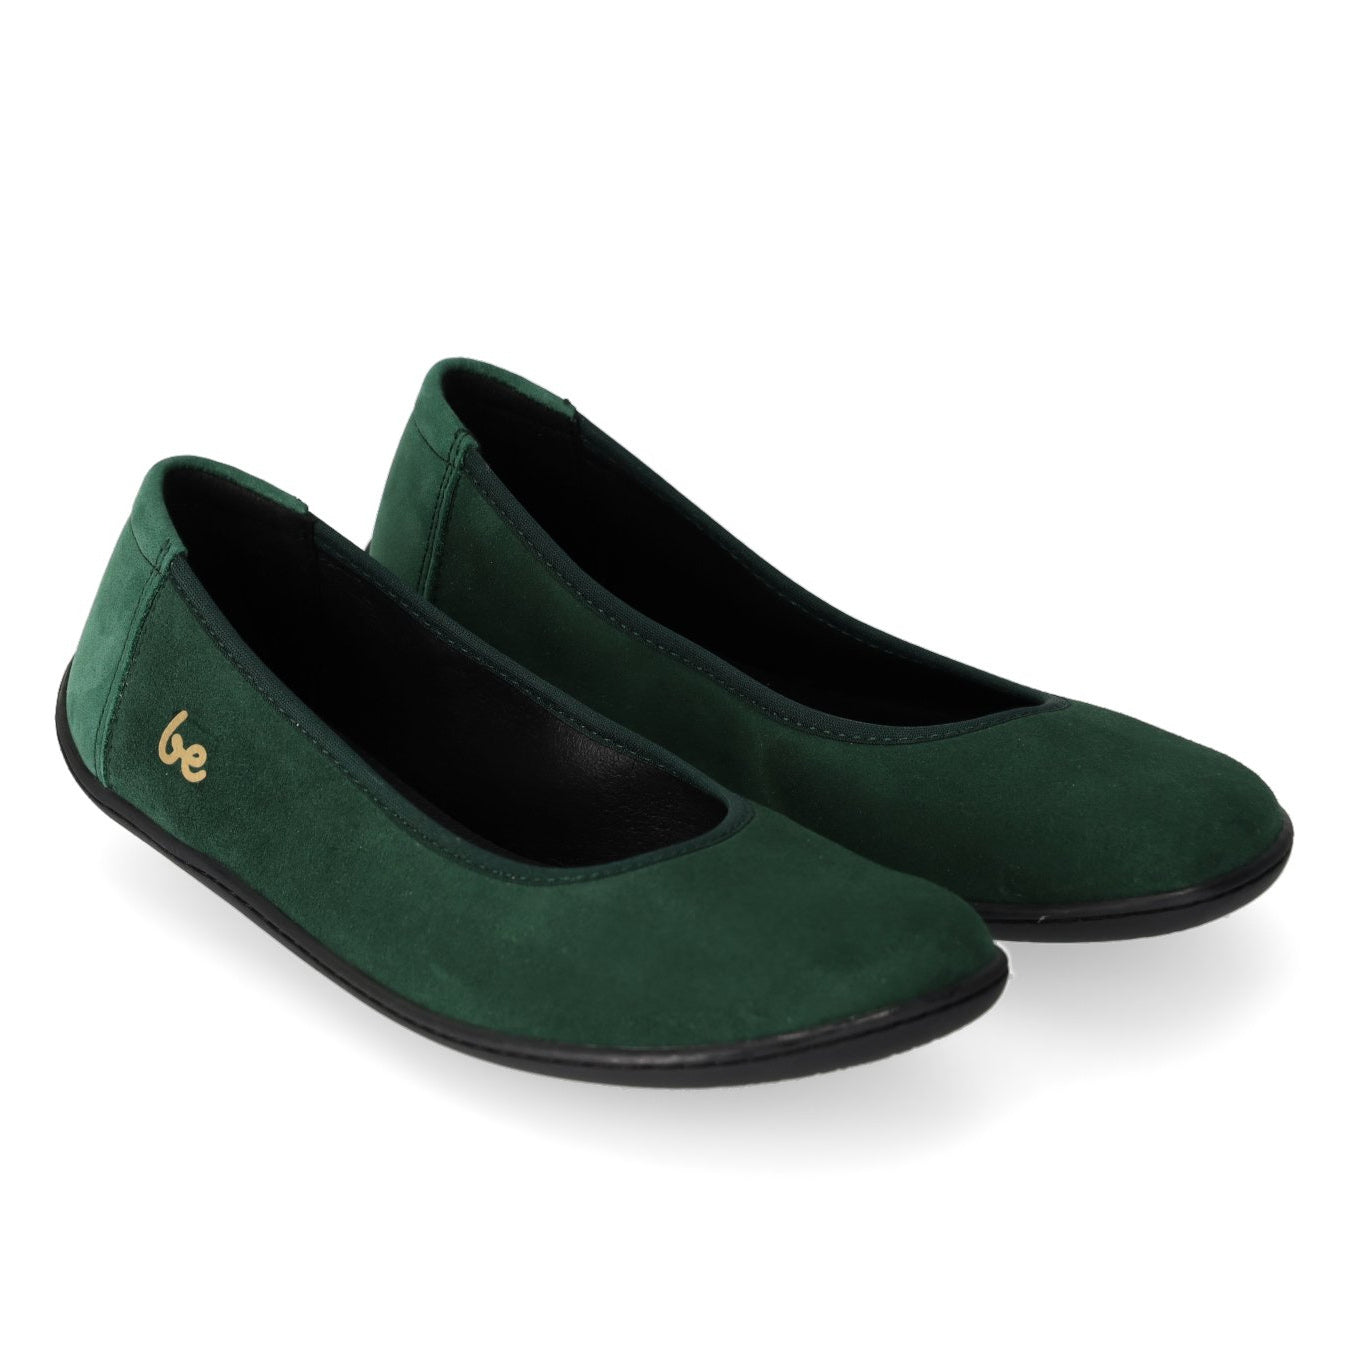 Be Lenka Sophie Flat - Emerald Green 40 - Like New